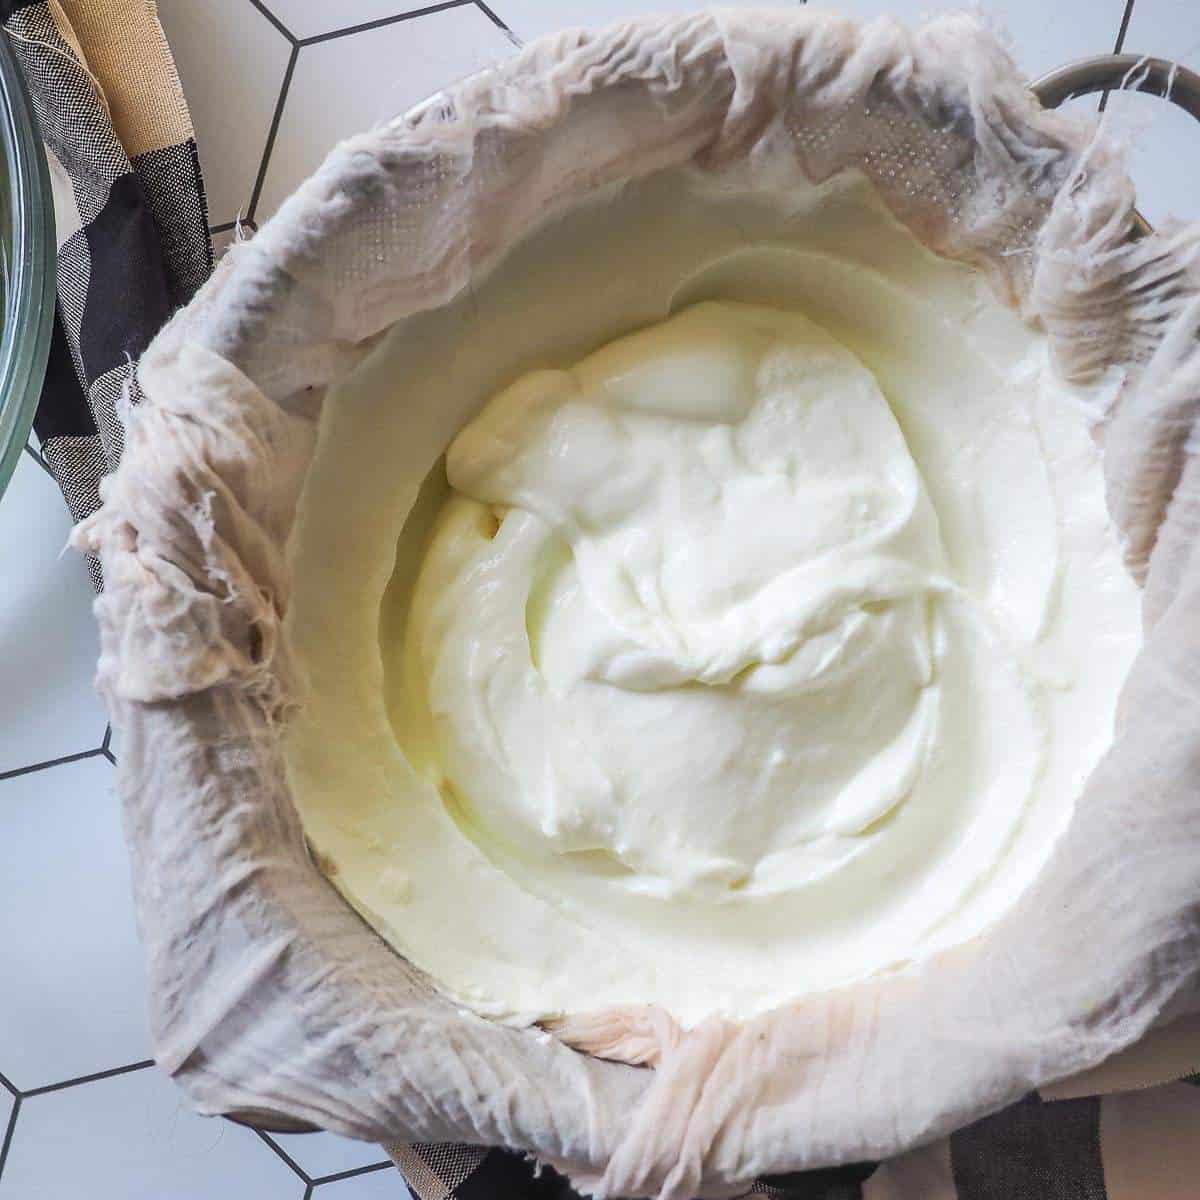 A bowl of yogurt straining in cheesecloth.